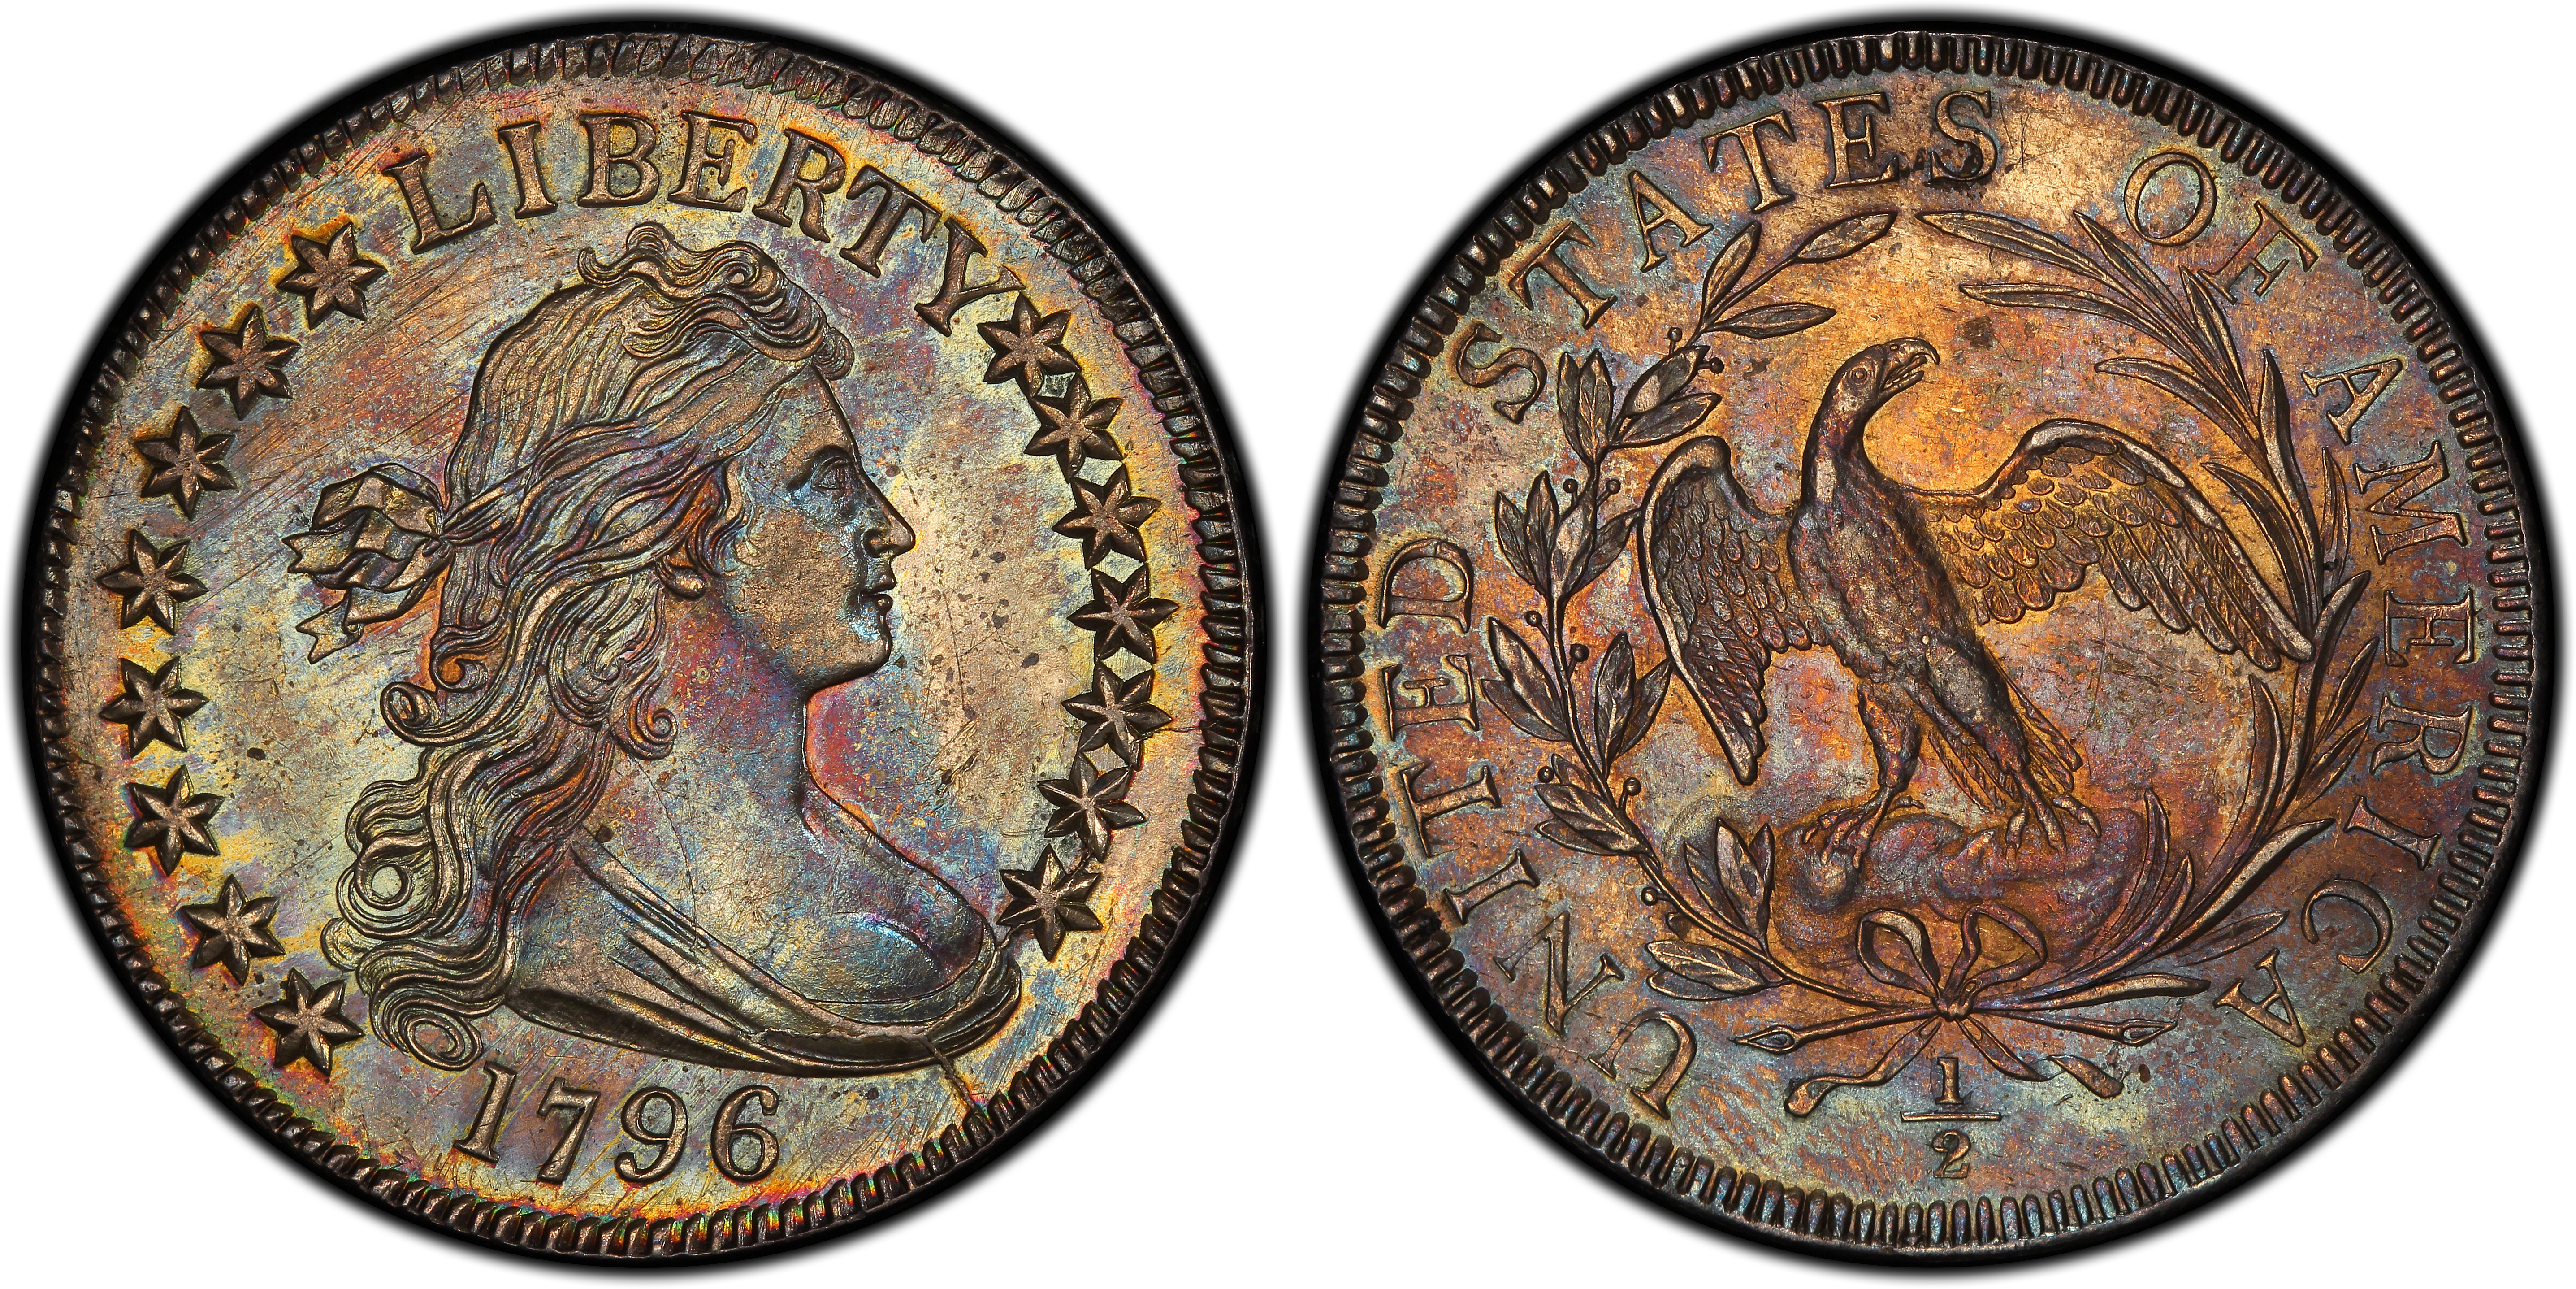 Paragon Numismatics - Half Dollar Coin - 1796 Flowing Hair Half Dollar